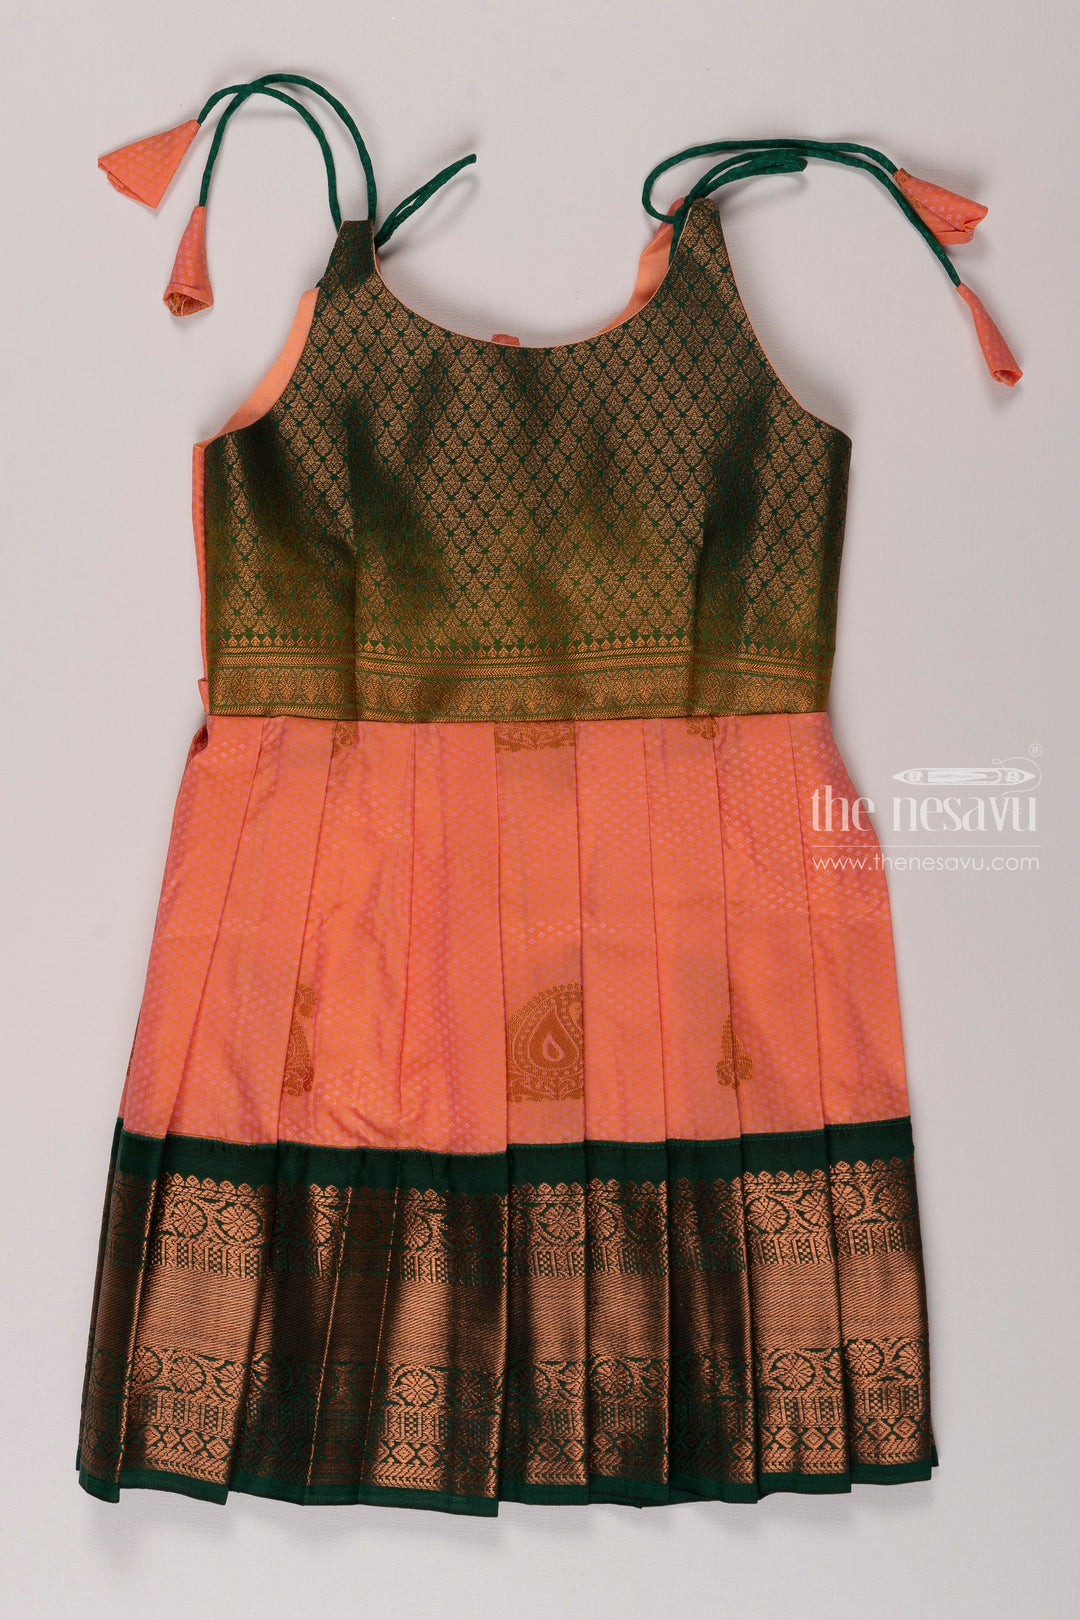 The Nesavu Tie-up Frock Girls Silk TieUp Ethnic Frock - Boutique Style Elegance Nesavu 18 (2Y) / Pink / Style 3 T343C-18 Trendy Silk Tie Up Frock for Girls | Floral Print Ethnic Dress | The Nesavu